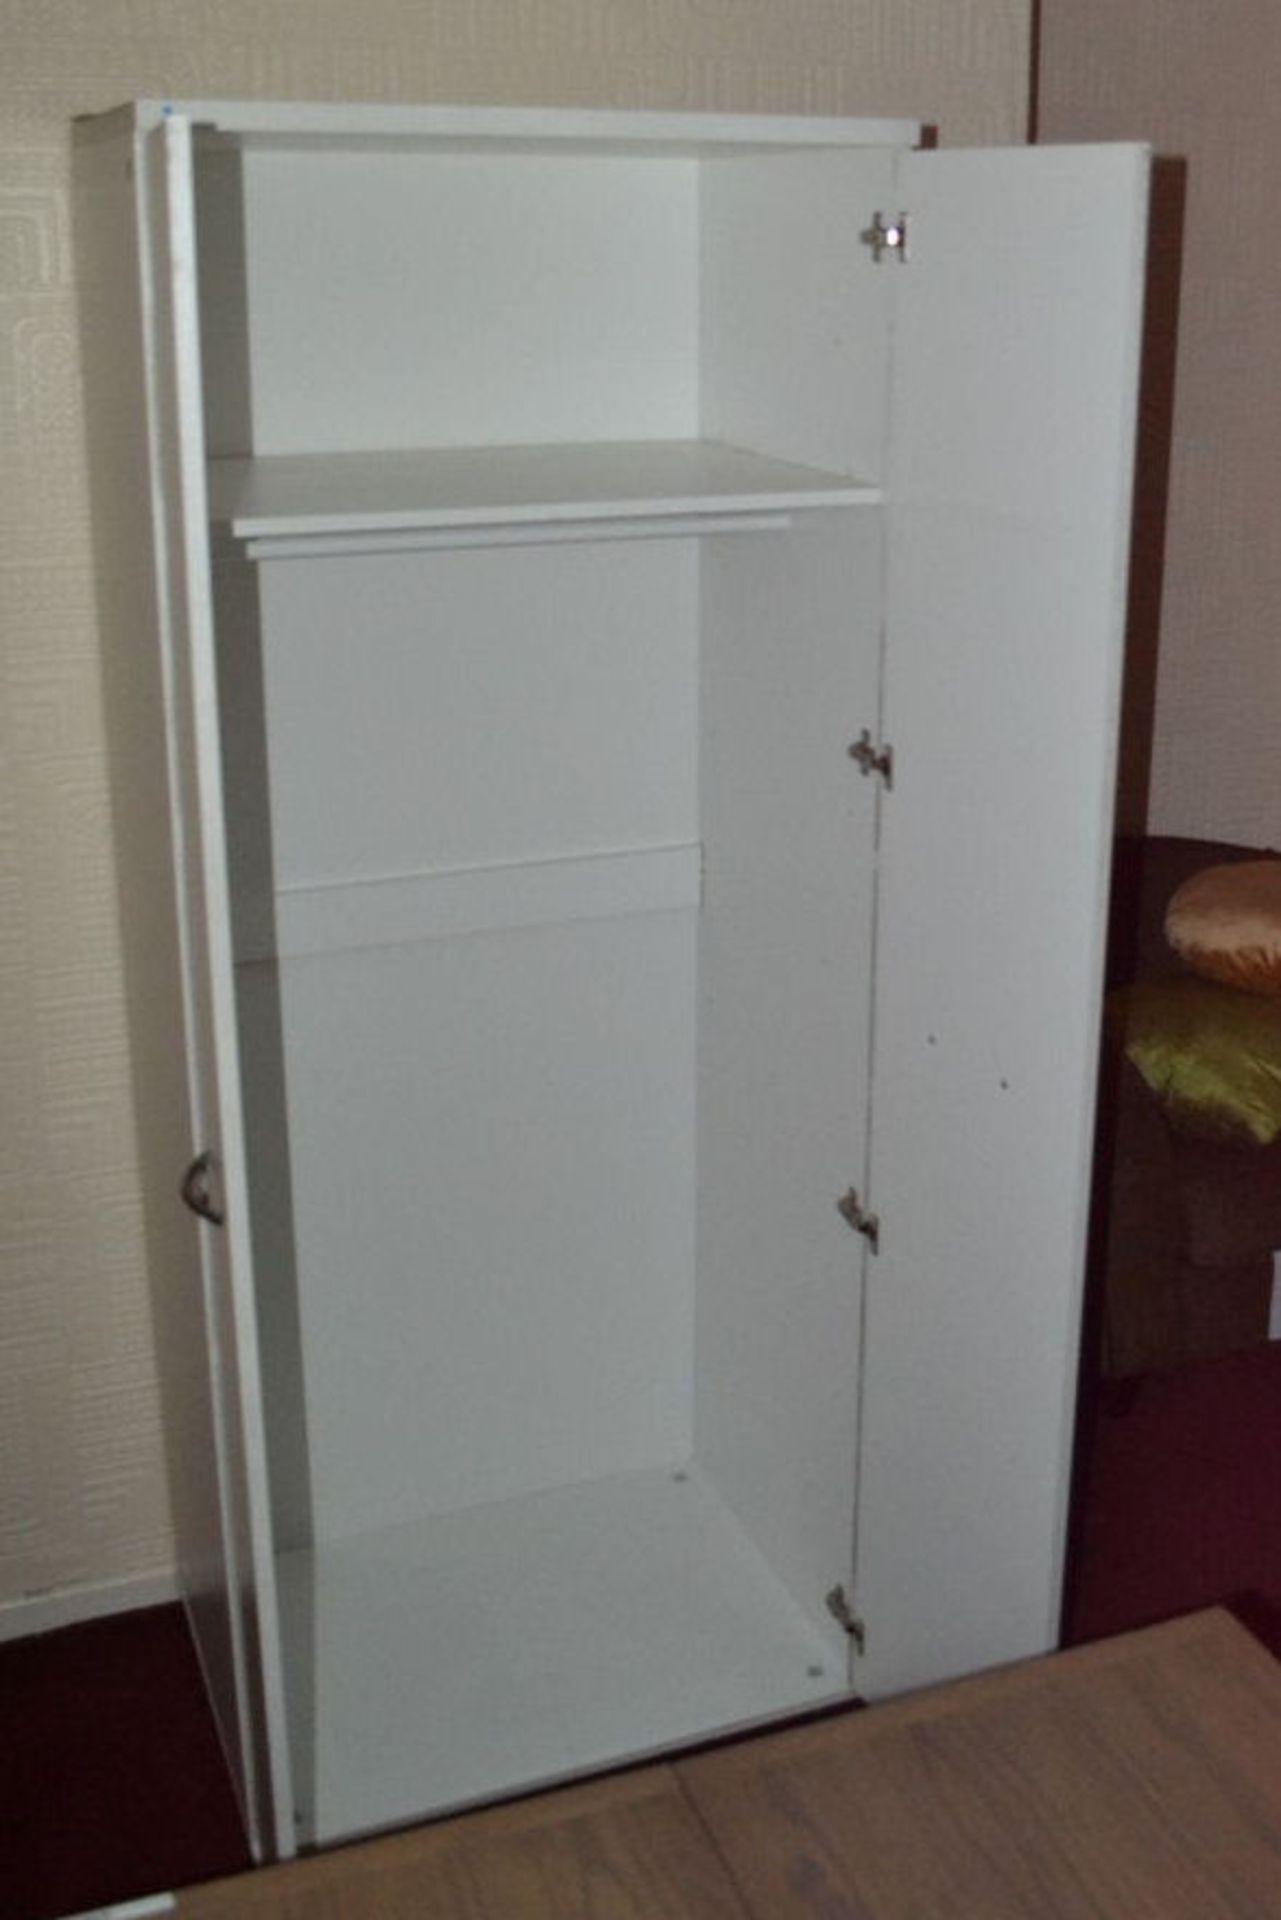 1 x Large 2-Door White Wardrobe. Original Retail £149. Height 189cm, Width 76cm, Depth 55cm. - Image 2 of 2